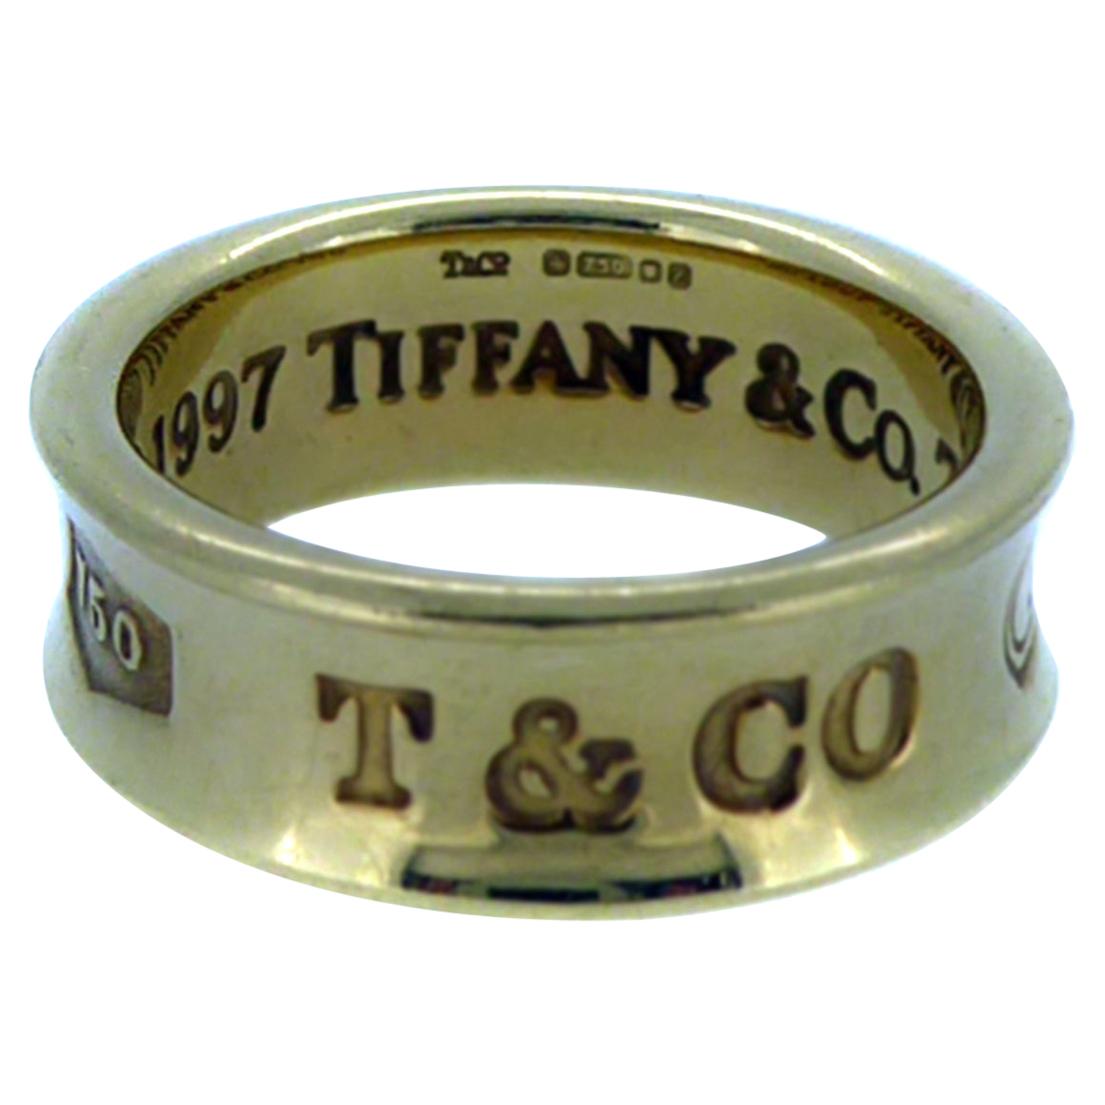 Tiffany & Co. "1837" Ring, Yellow Gold Band